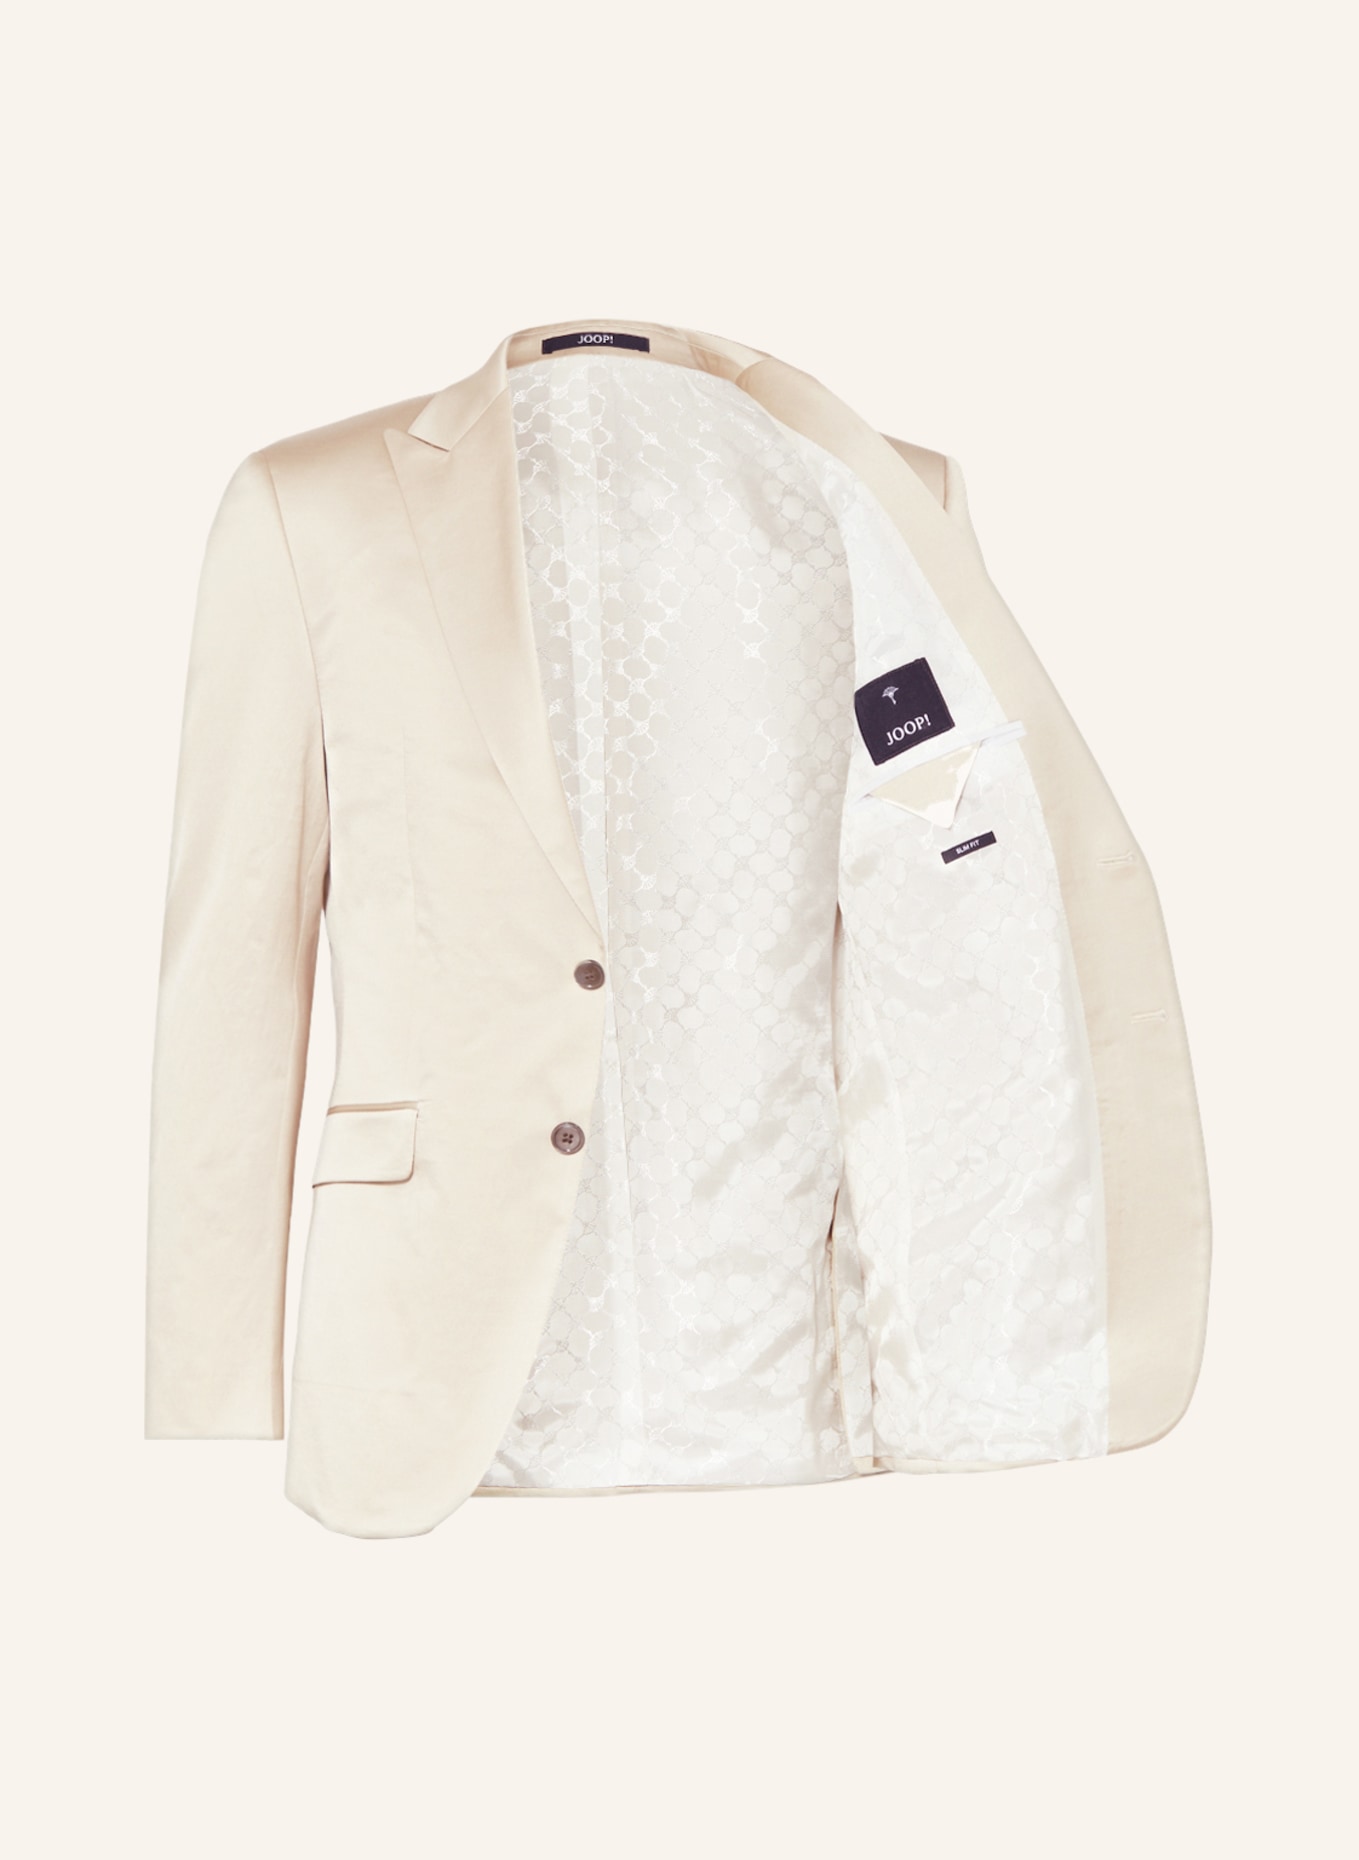 JOOP! Suit jacket HAWKER slim fit, Color: 260 Medium Beige               260 (Image 4)